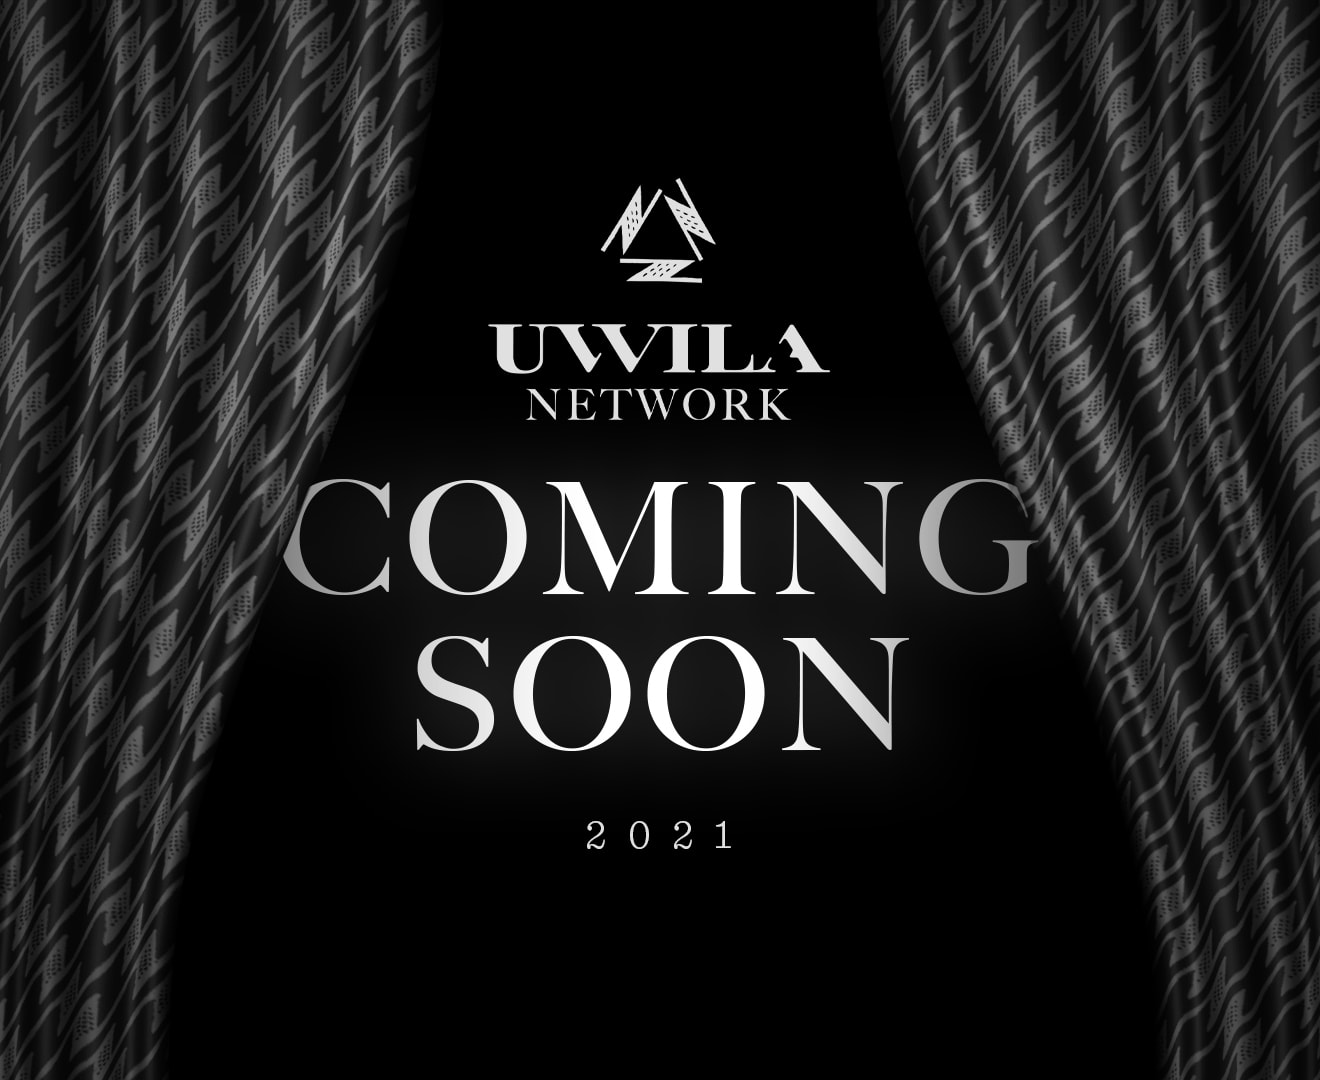 Uwila Network Coming Soon Banner on Black Background